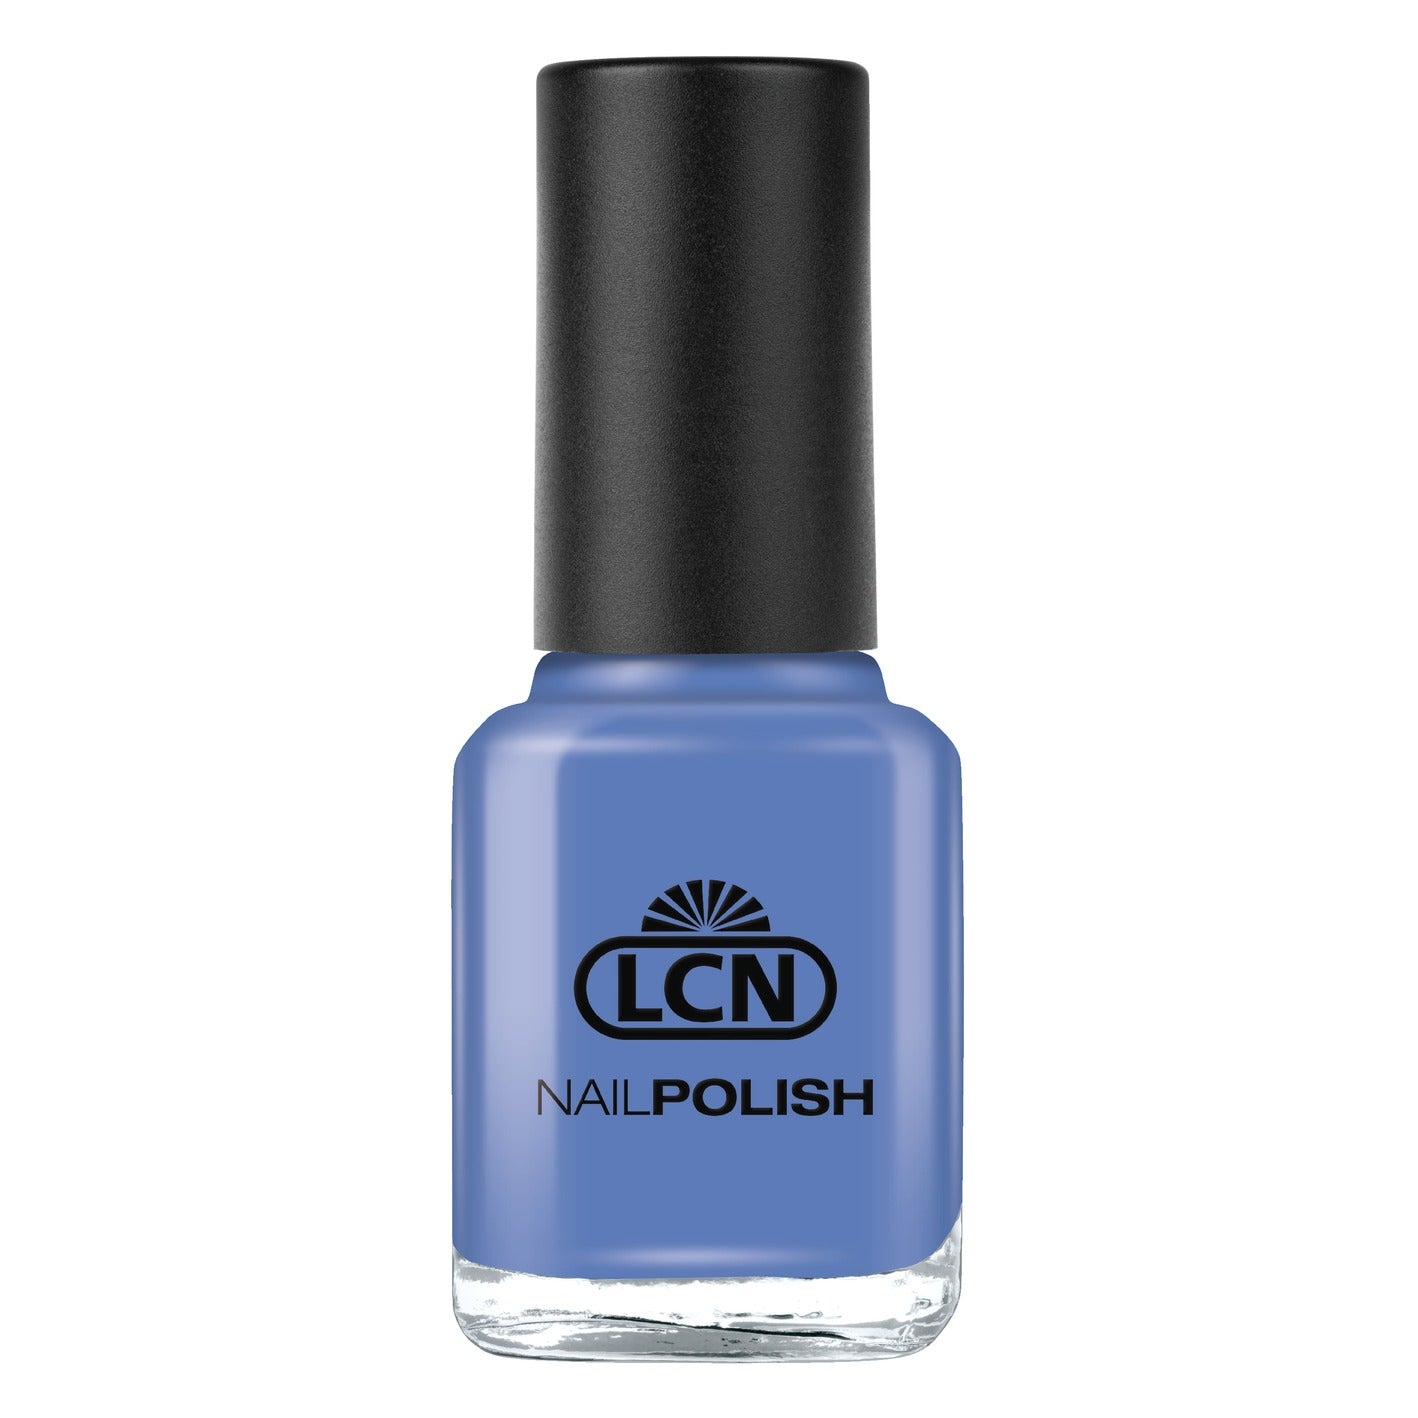 LCN Nail Polish, C02 lilac coral, 8ml